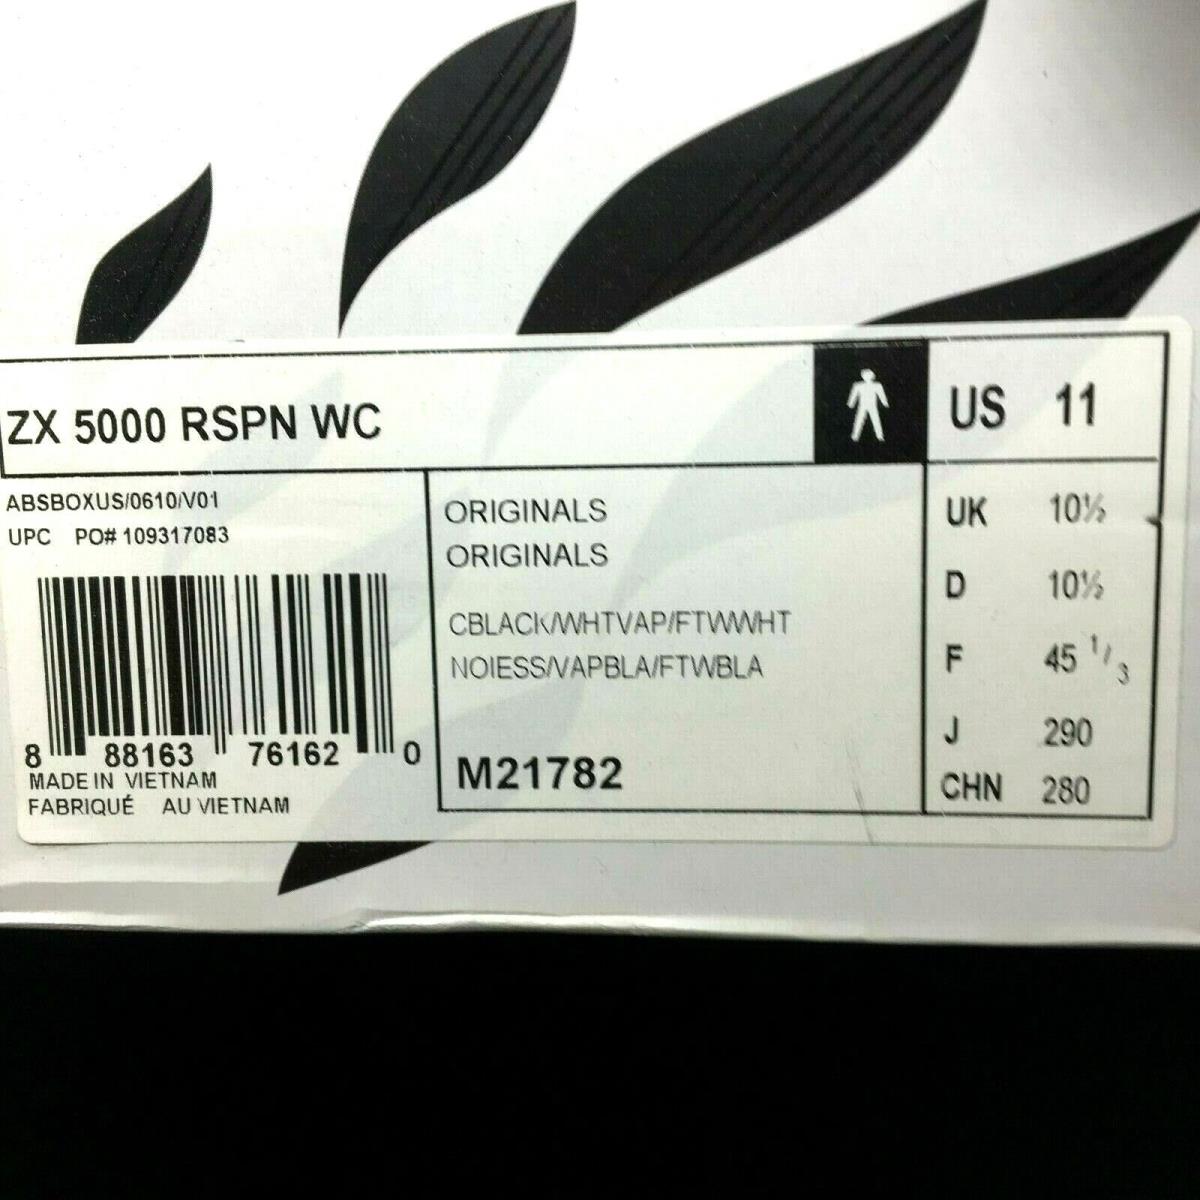 Adidas ZX 5000 RSPN Originals Response Battle Pack World Cup M21782 Mens  Shoes